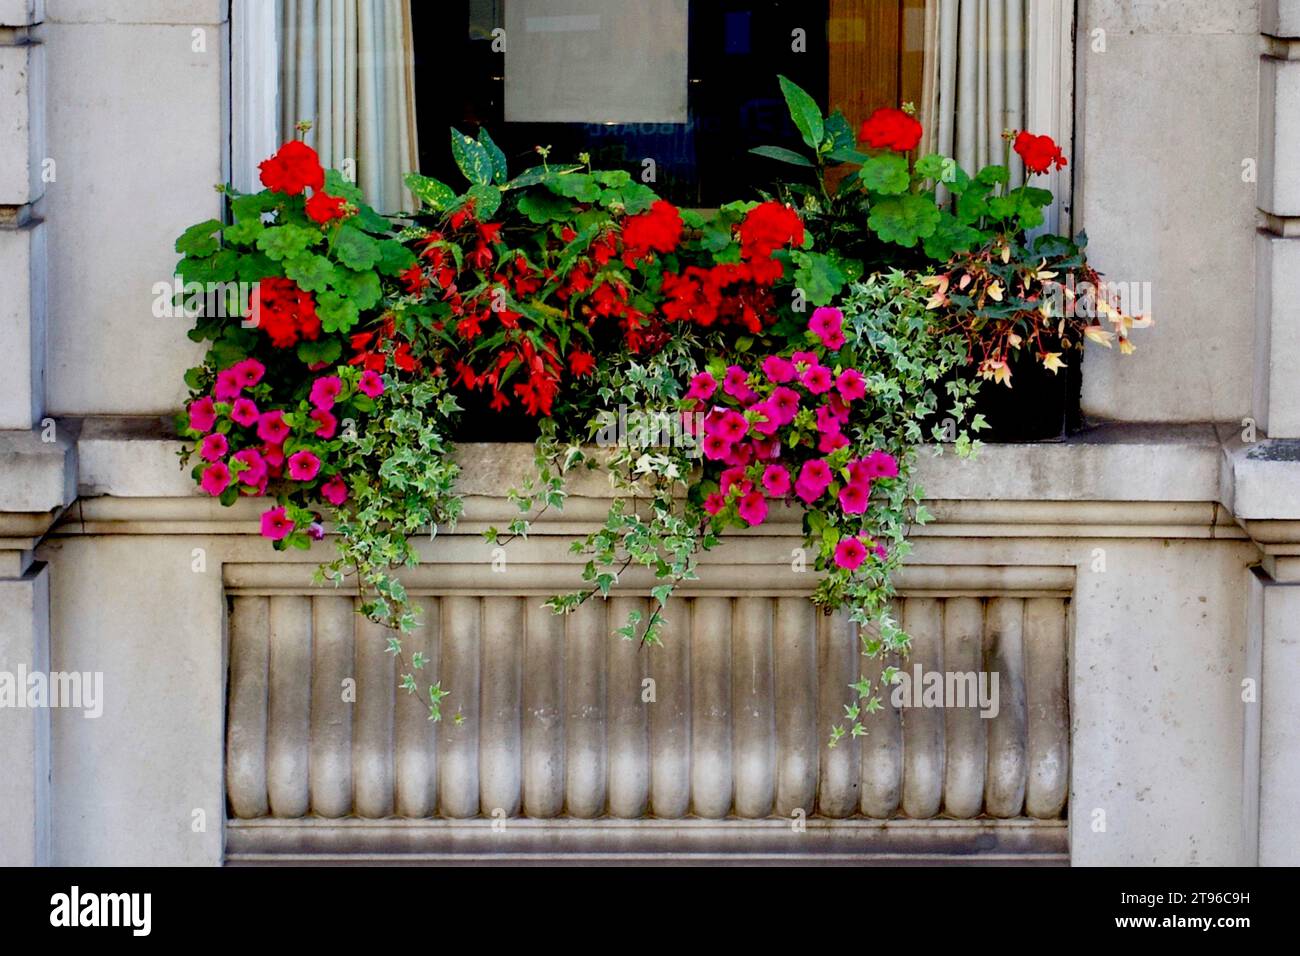 Flowers in a window box, London. Stock Photo